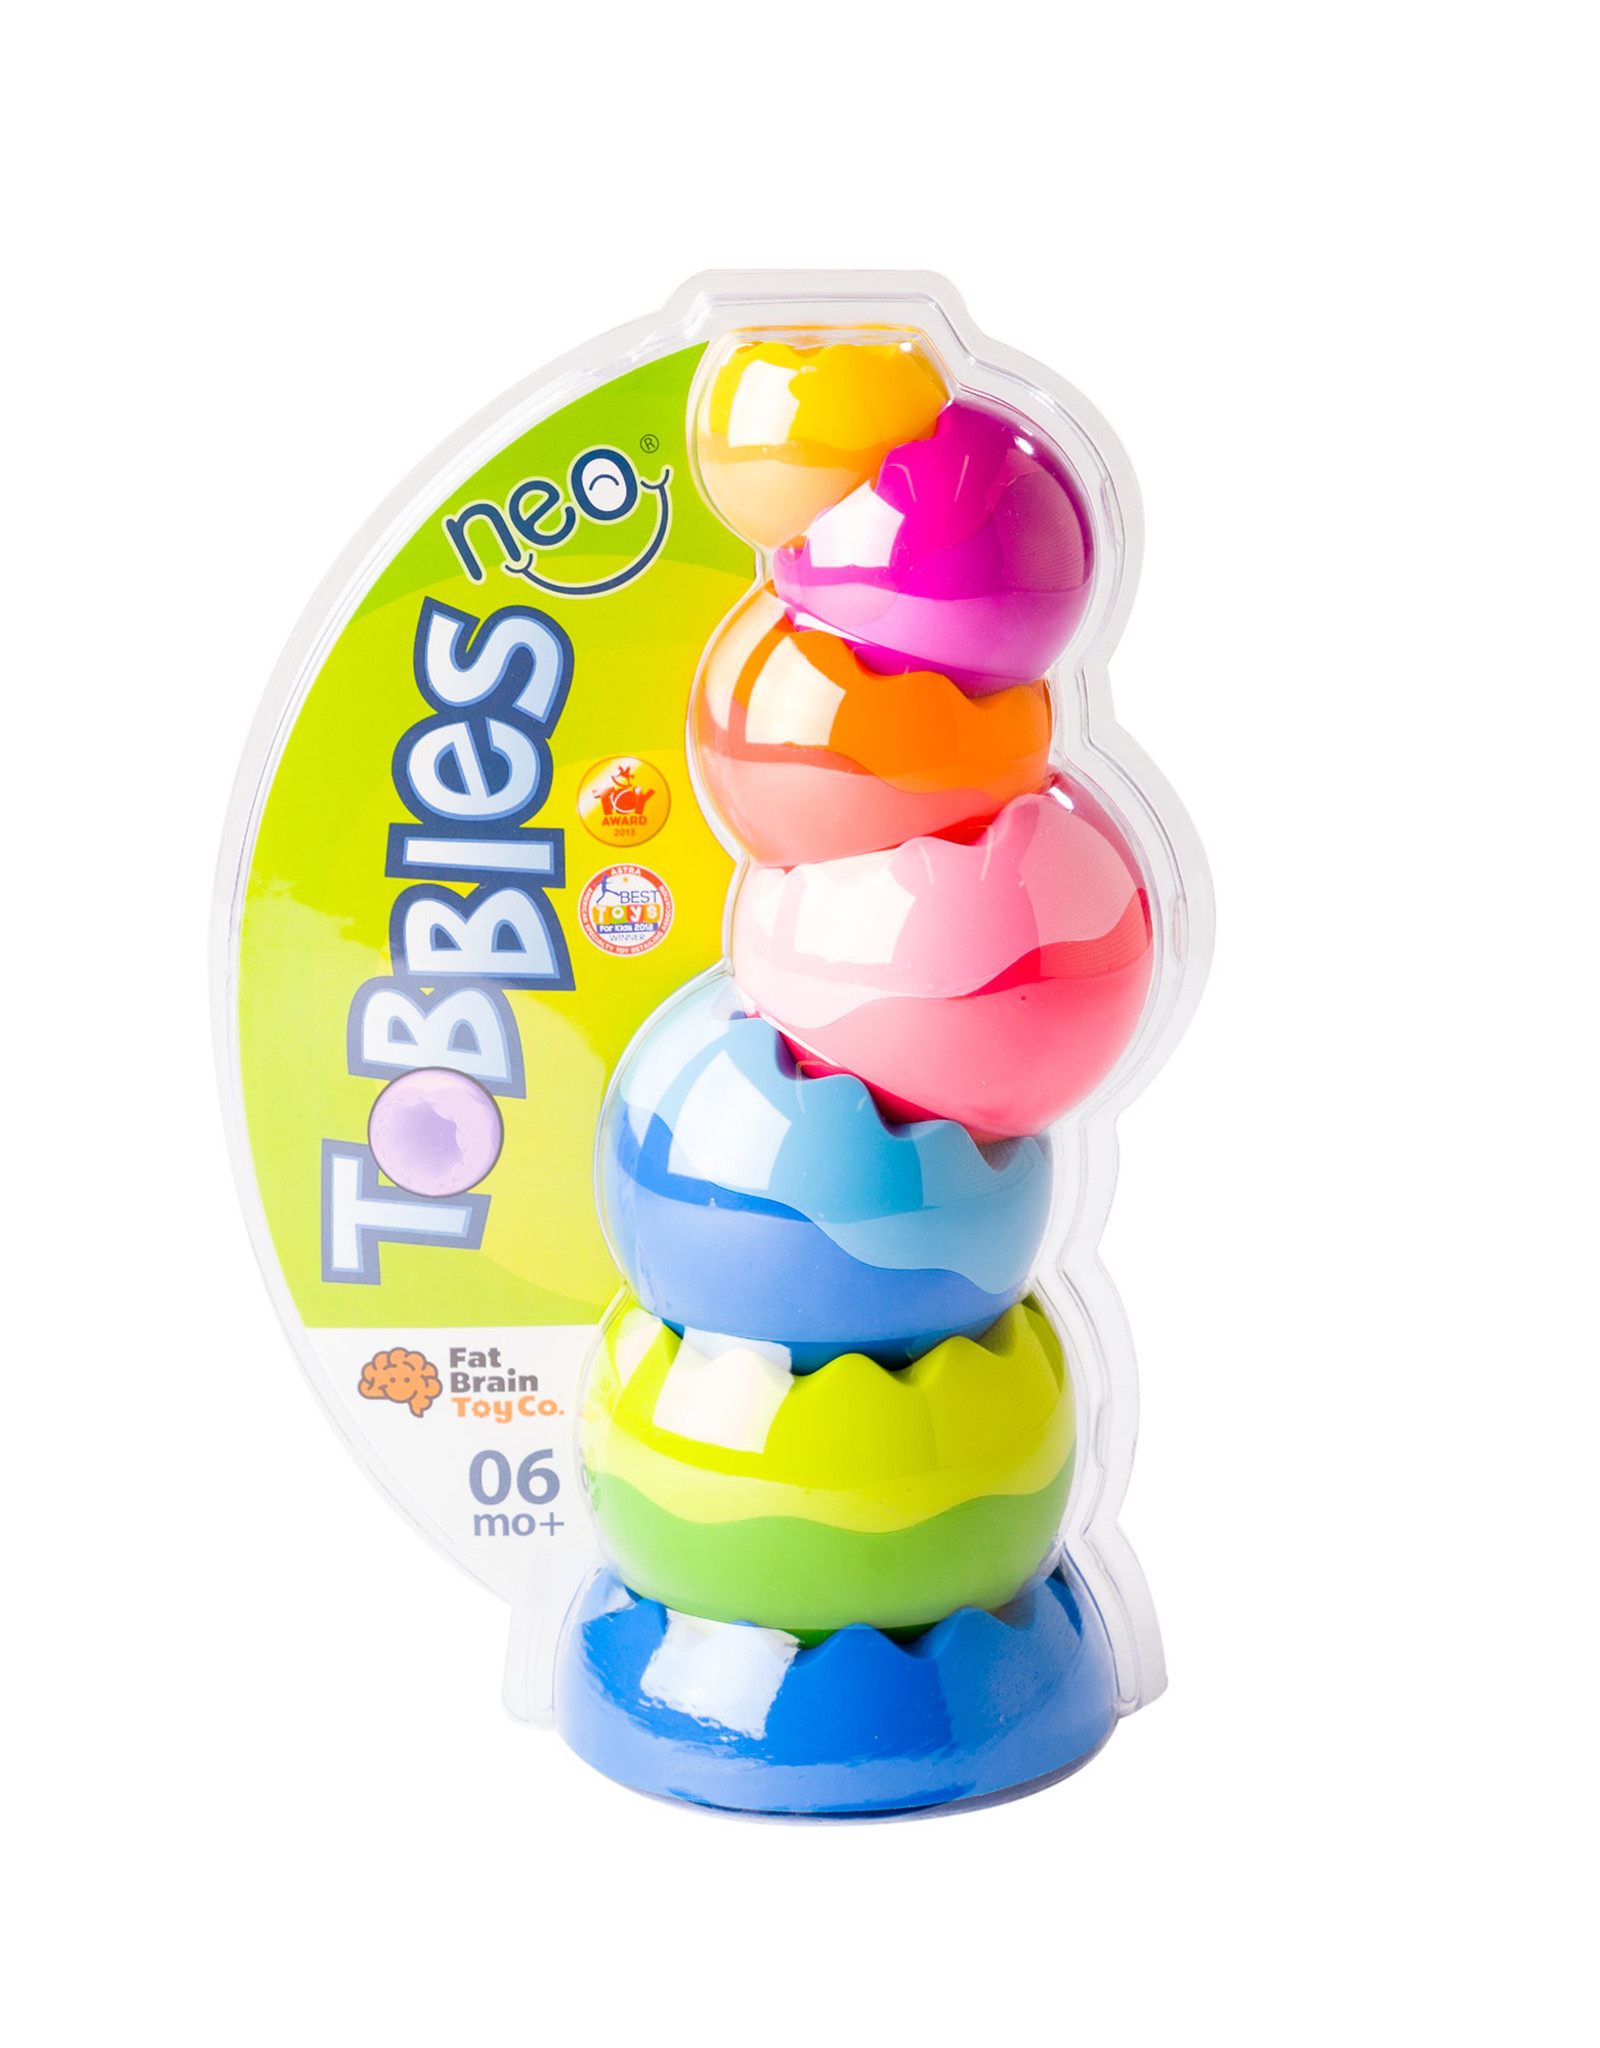 Fat Brain Toy Co. Tobbles Neo